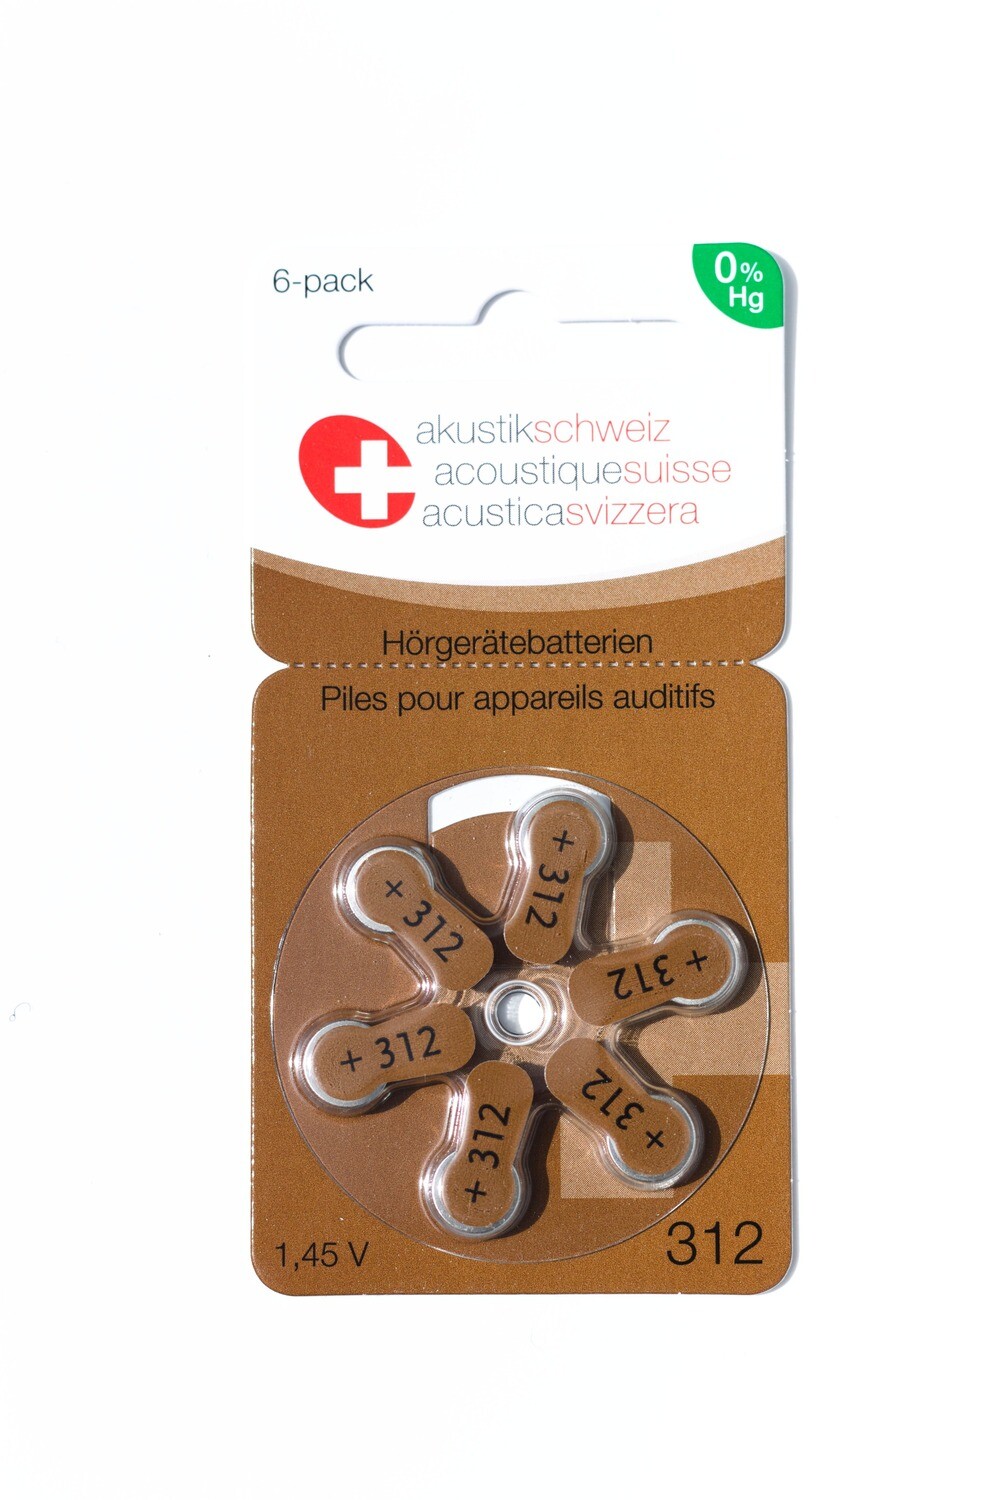 Grösse 312, Marke Akustik Schweiz, Hörgerätebatterien